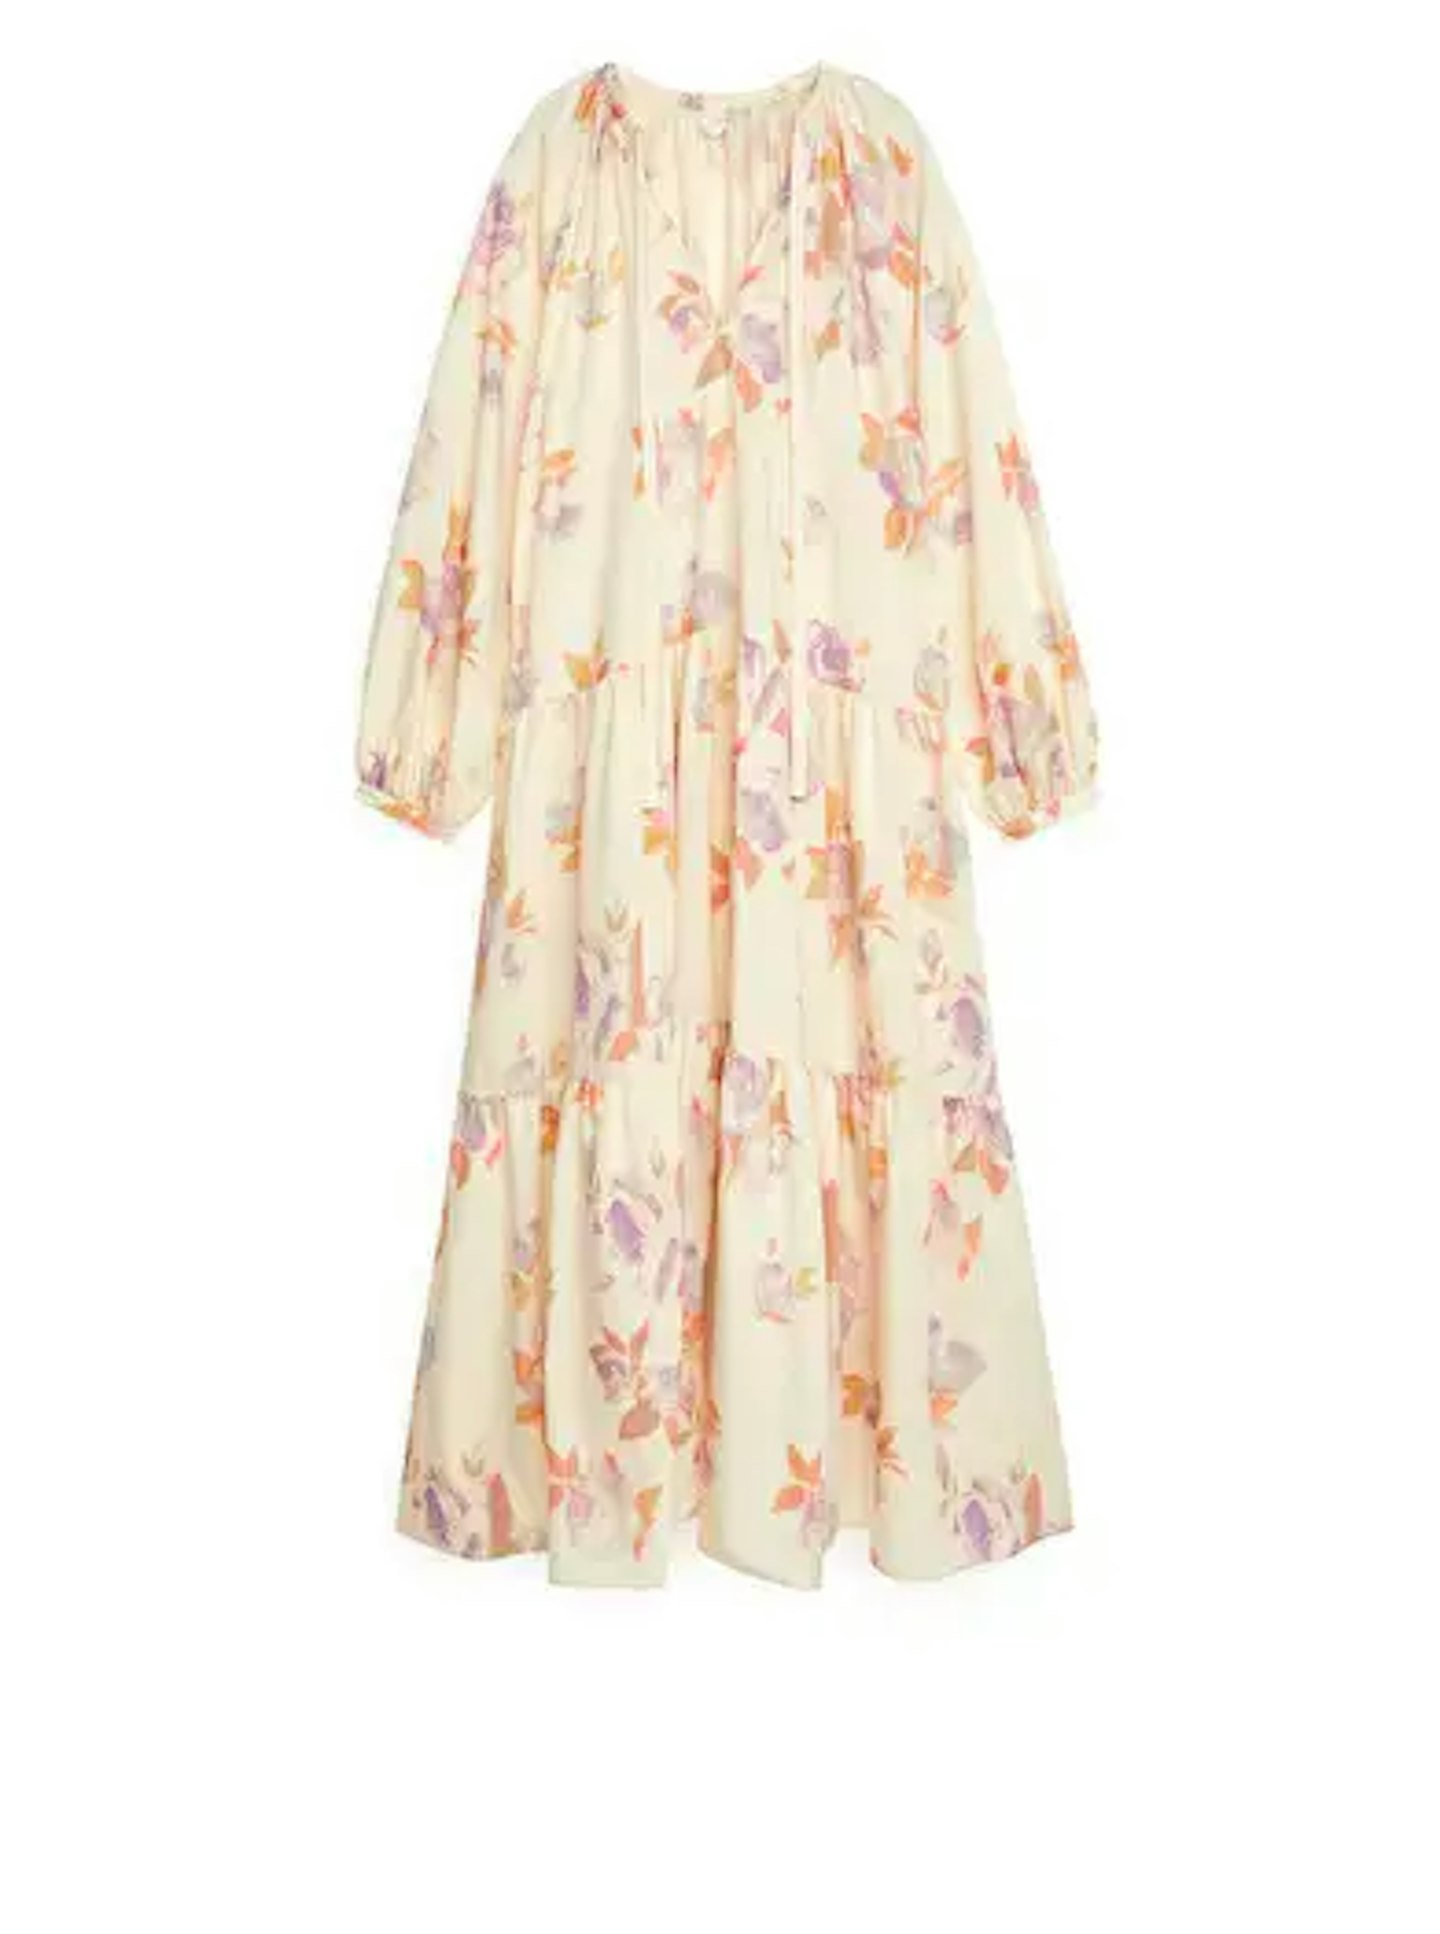 Arket, Floral Tier Dress, £99